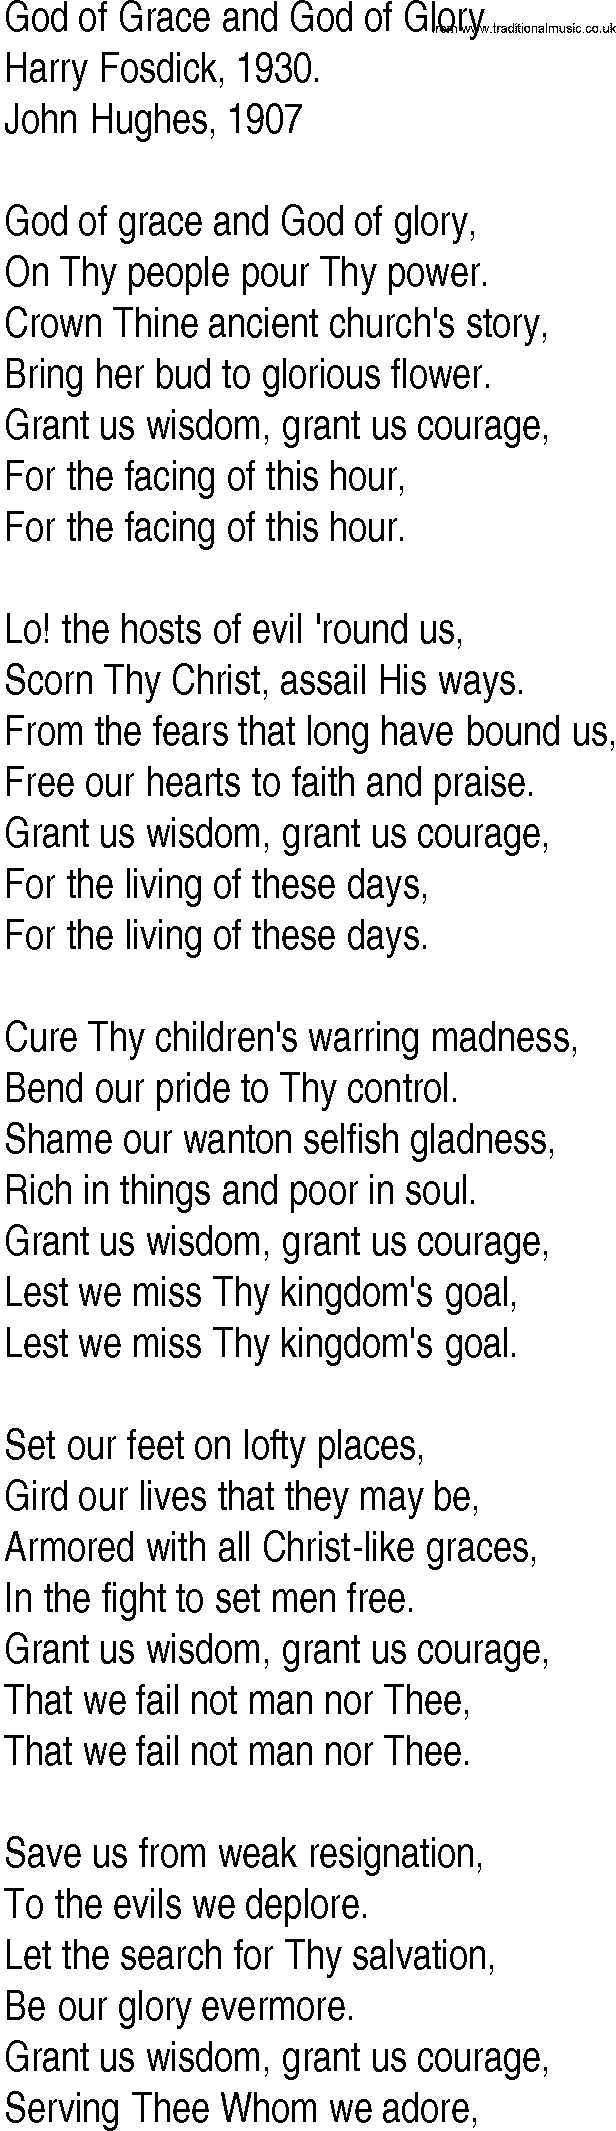 Hymn and Gospel Song: God of Grace and God of Glory by Harry Fosdick lyrics